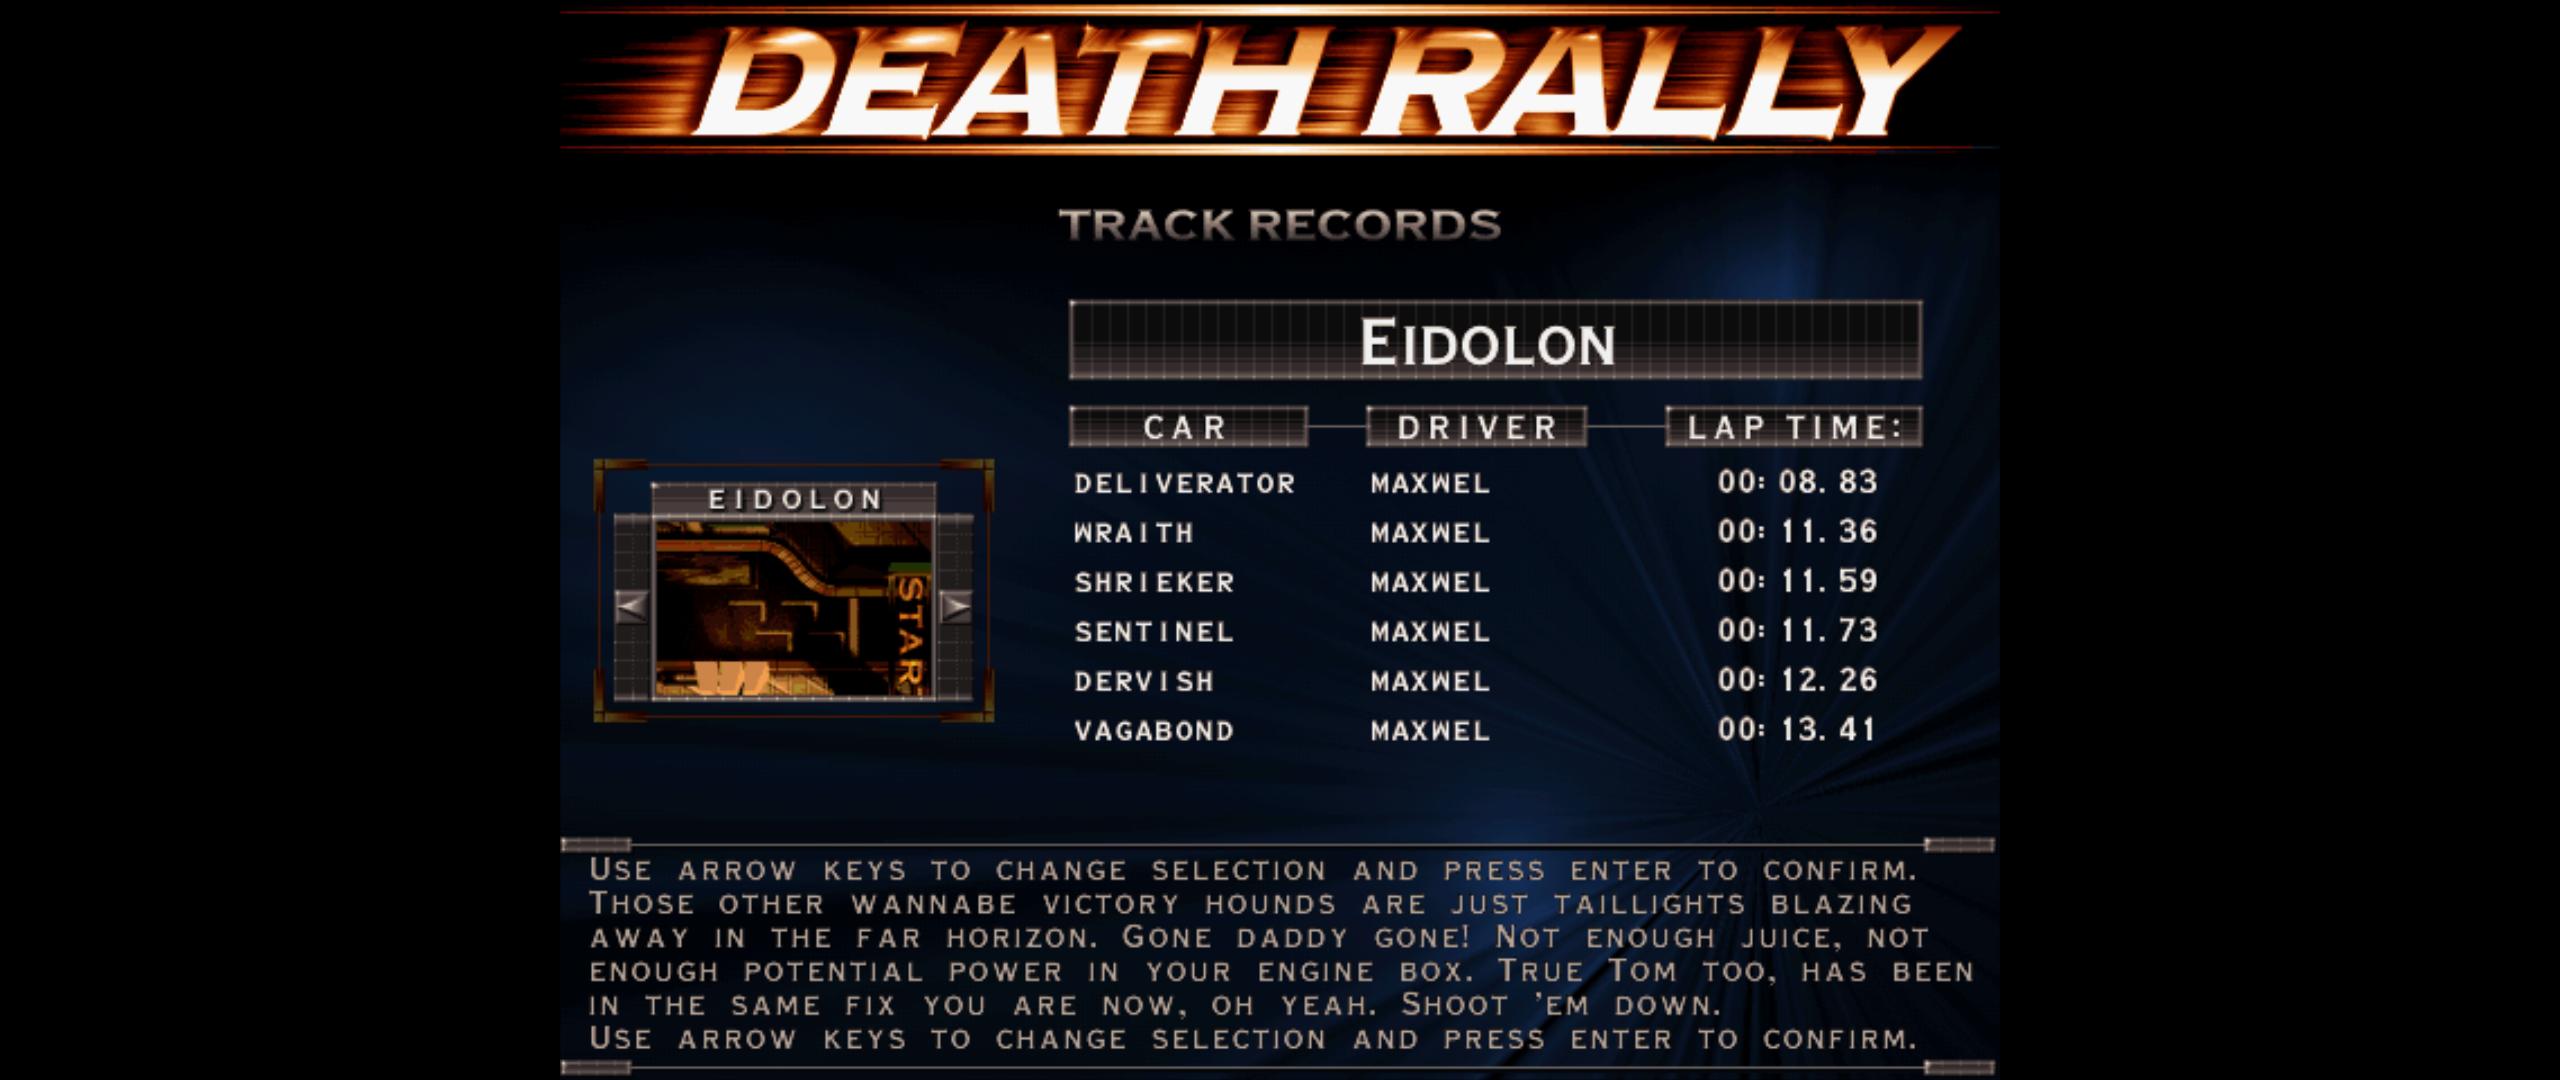 Maxwel: Death Rally [Eidolon, Deliverator Car] (PC) 0:00:08.83 points on 2016-03-04 07:13:30